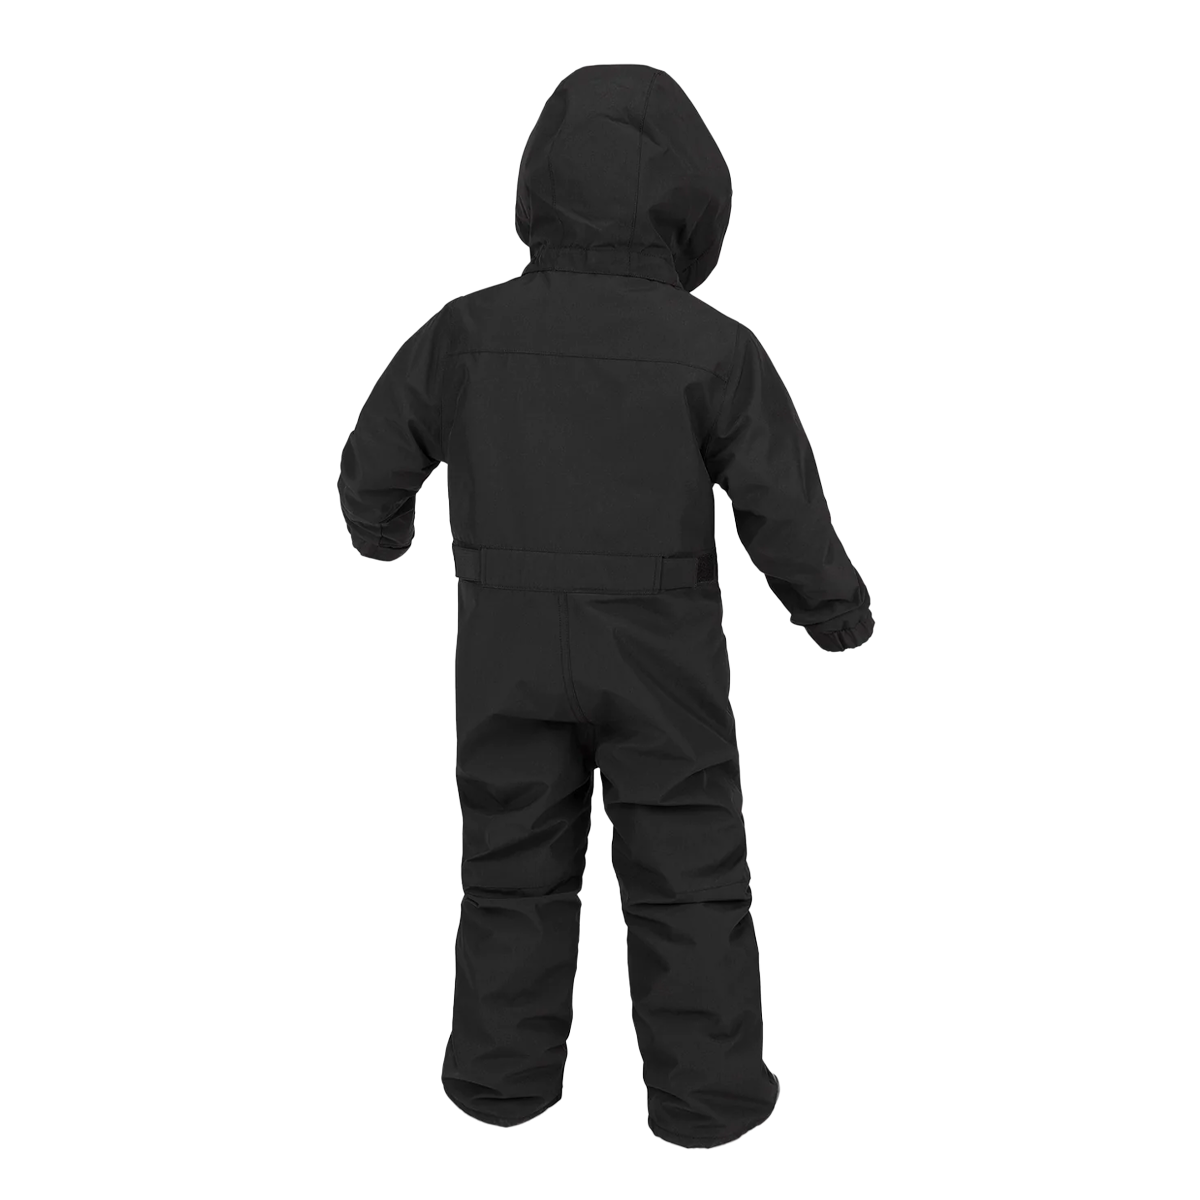 volcom Toddler Onesie Snow Suit - Black